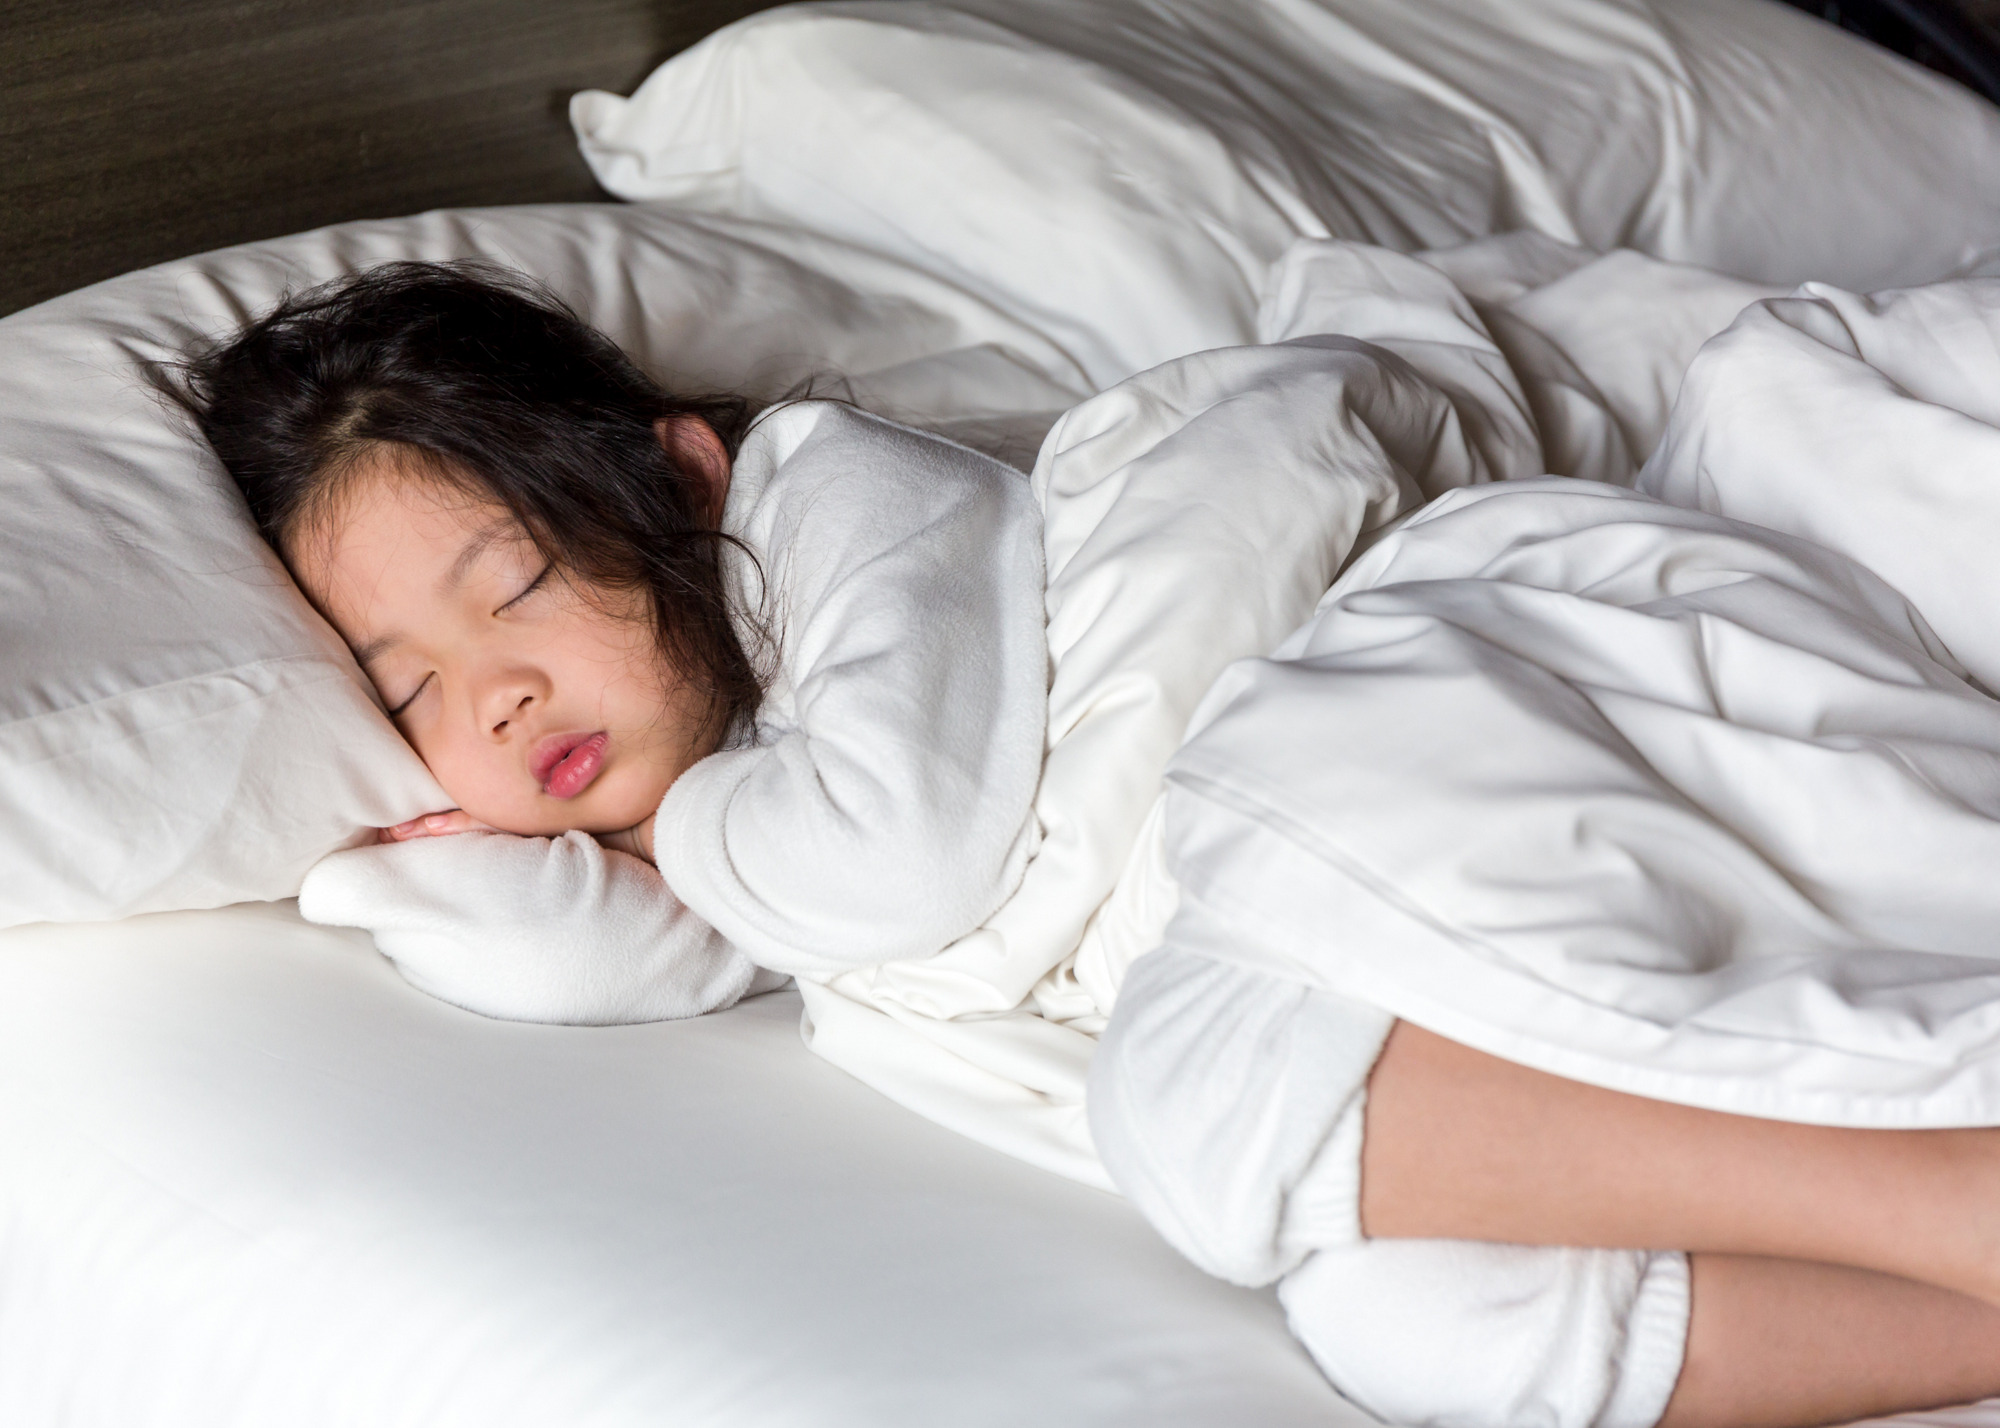 Дочка Спит Без Одеяла Фото